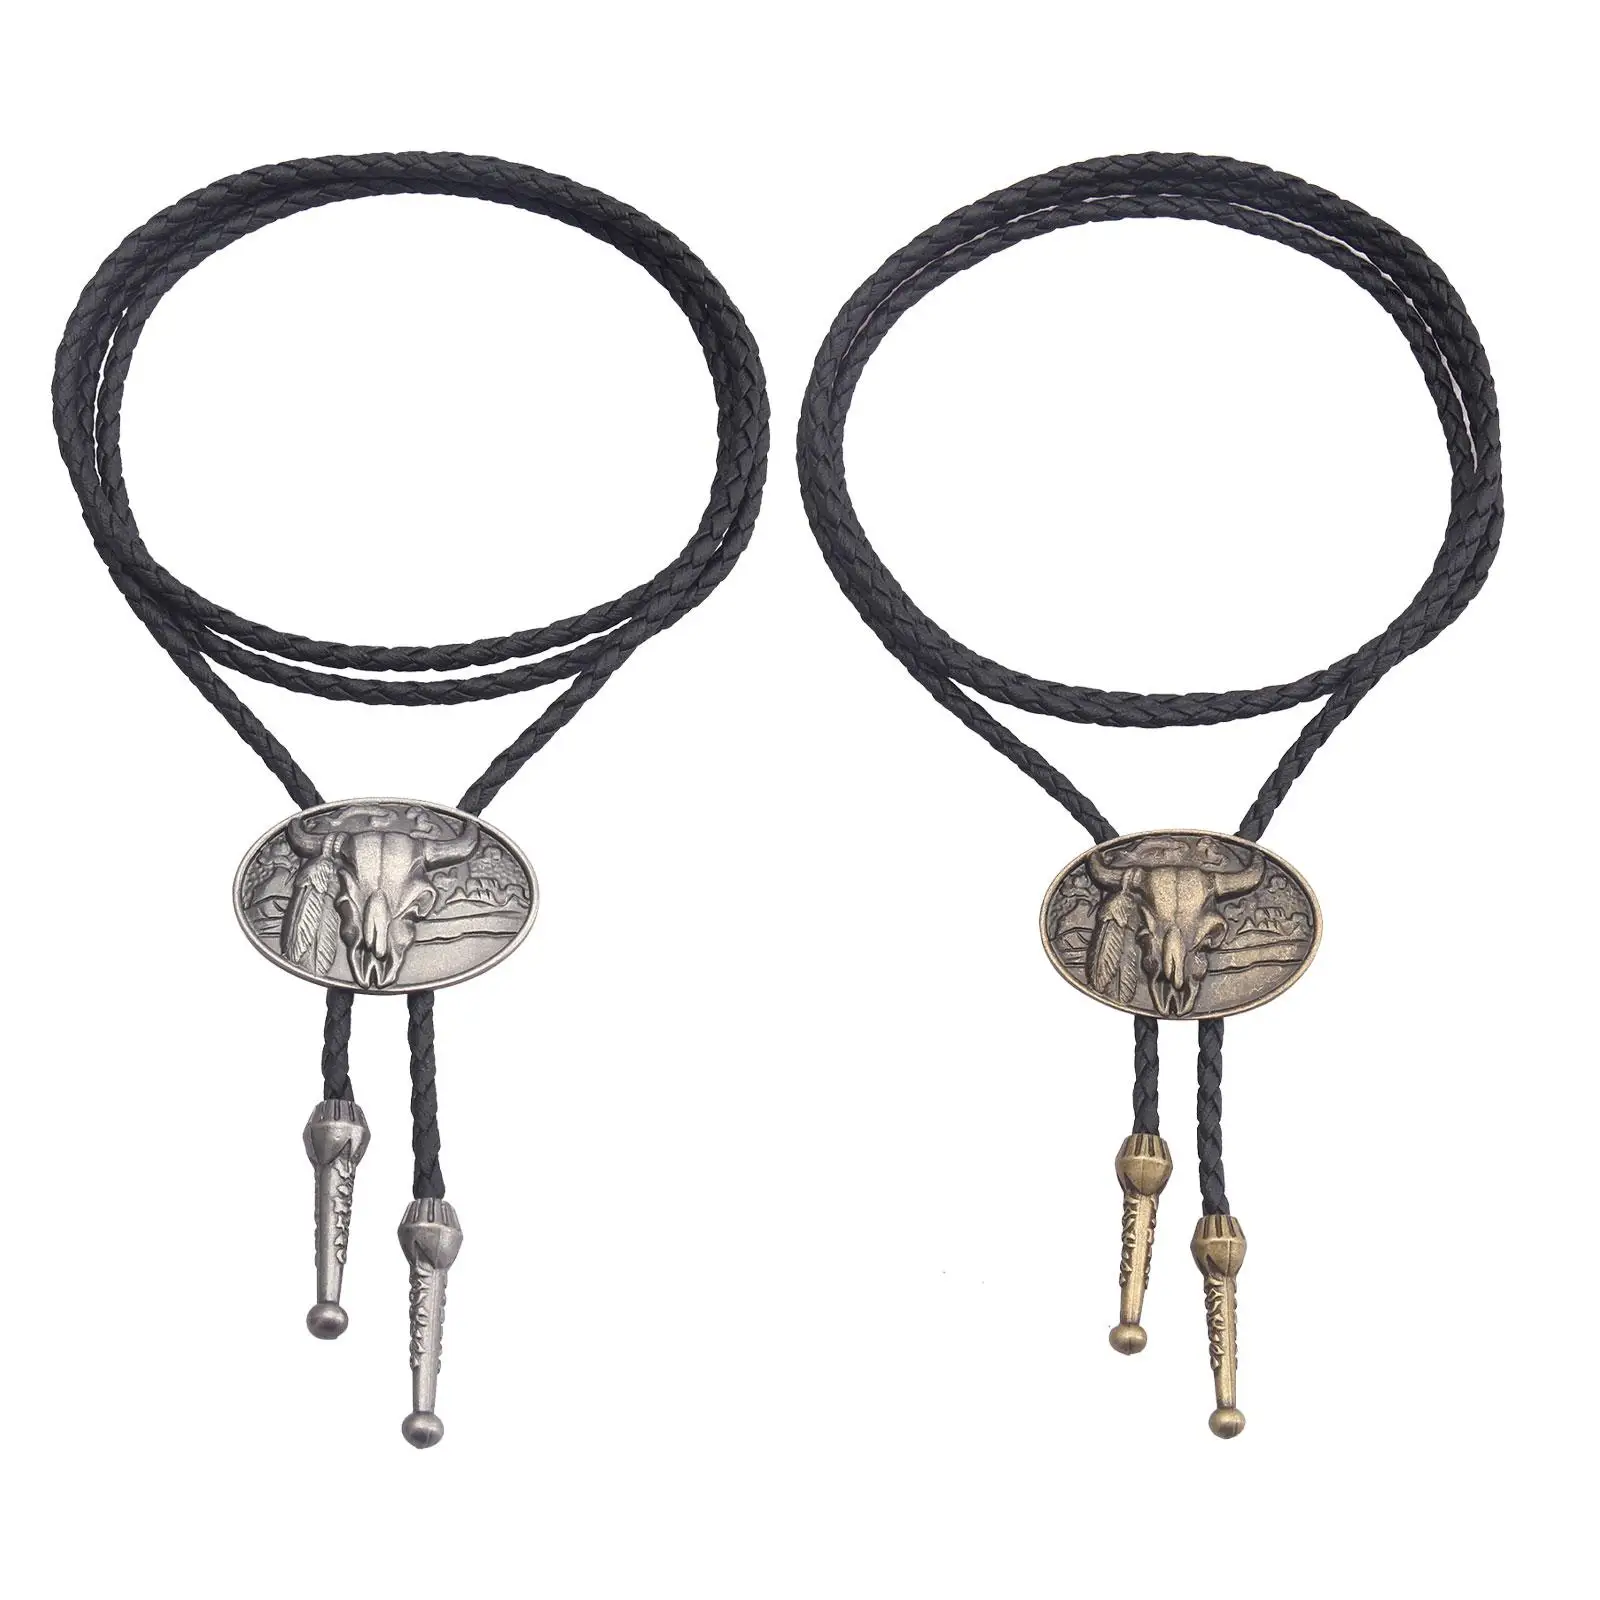 Bolo Tie Oval Pendant Necklaces Western Rodeo  Retro Ornament Accessory Rope Chain Bolo Neckties for Travel Anniversary